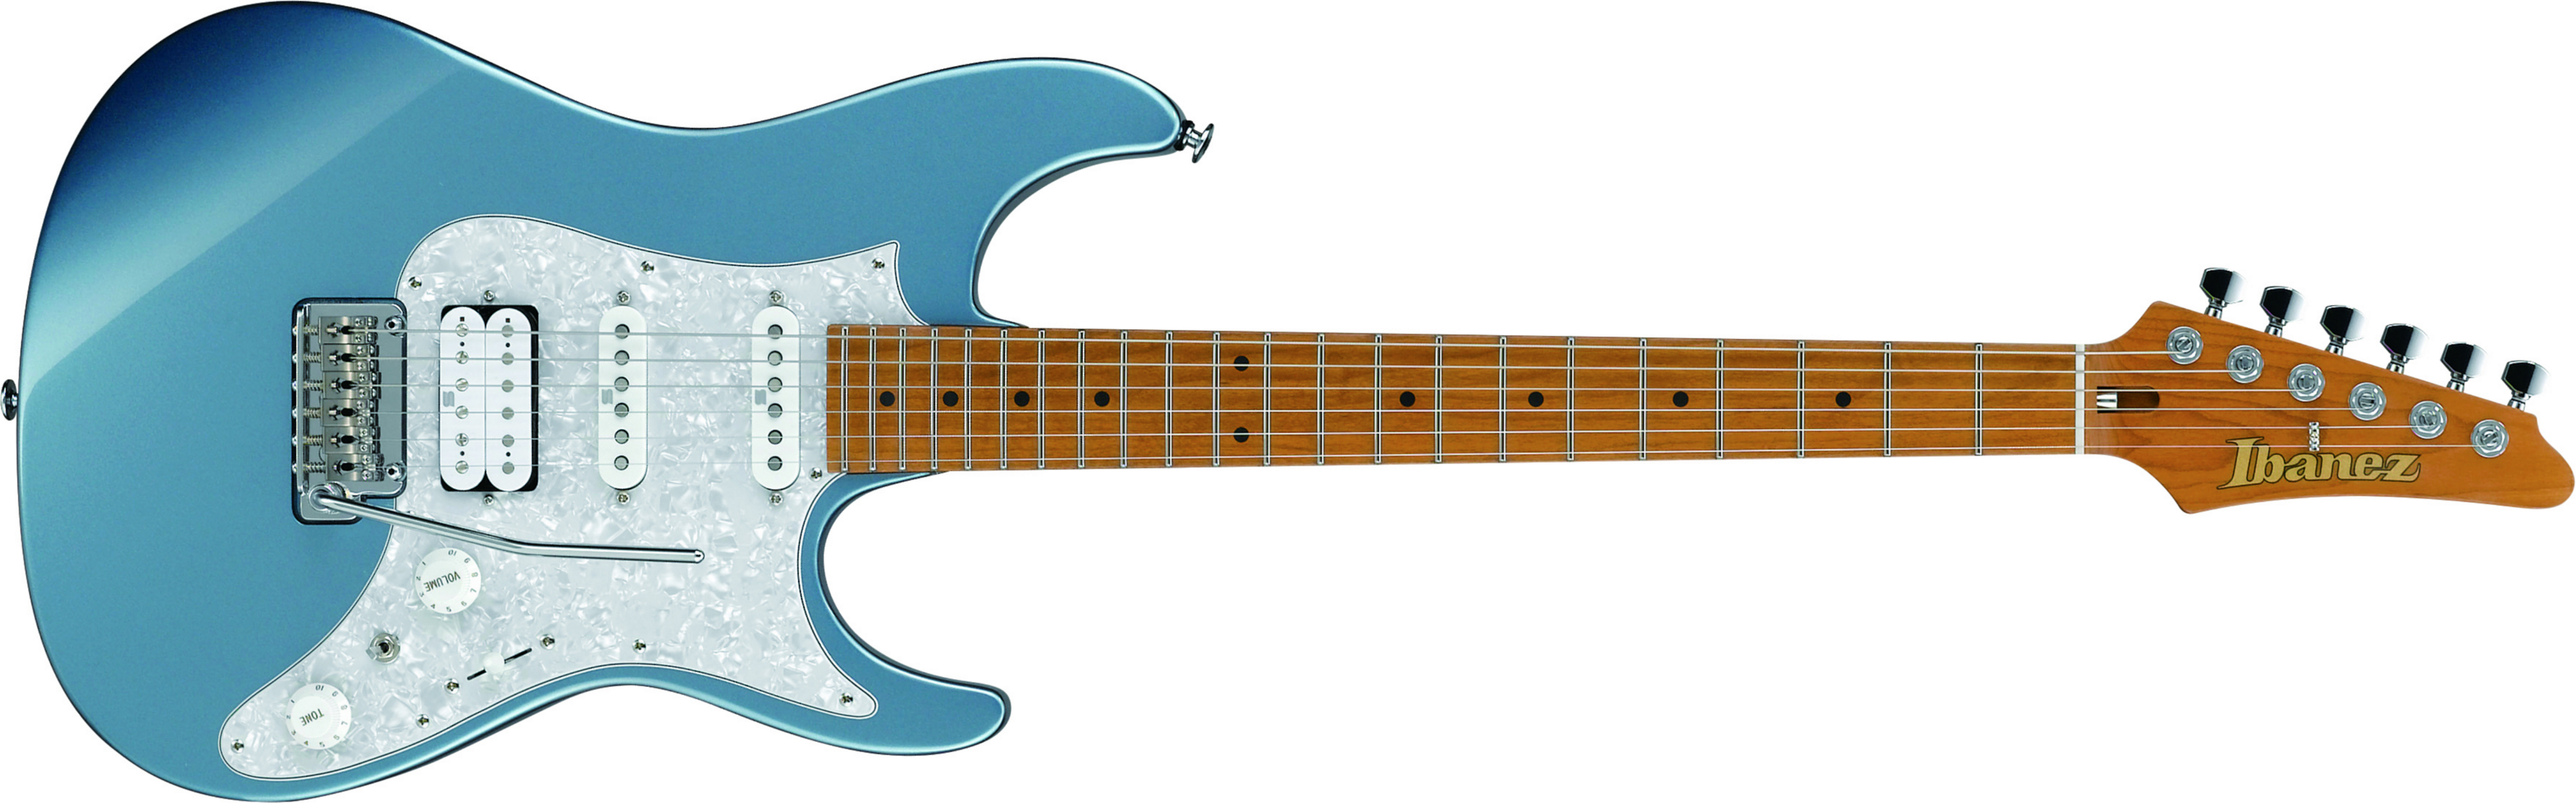 Ibanez Az2204 Icm Prestige Jap Hss Trem Mn - Ice Blue Metallic - Str shape electric guitar - Main picture